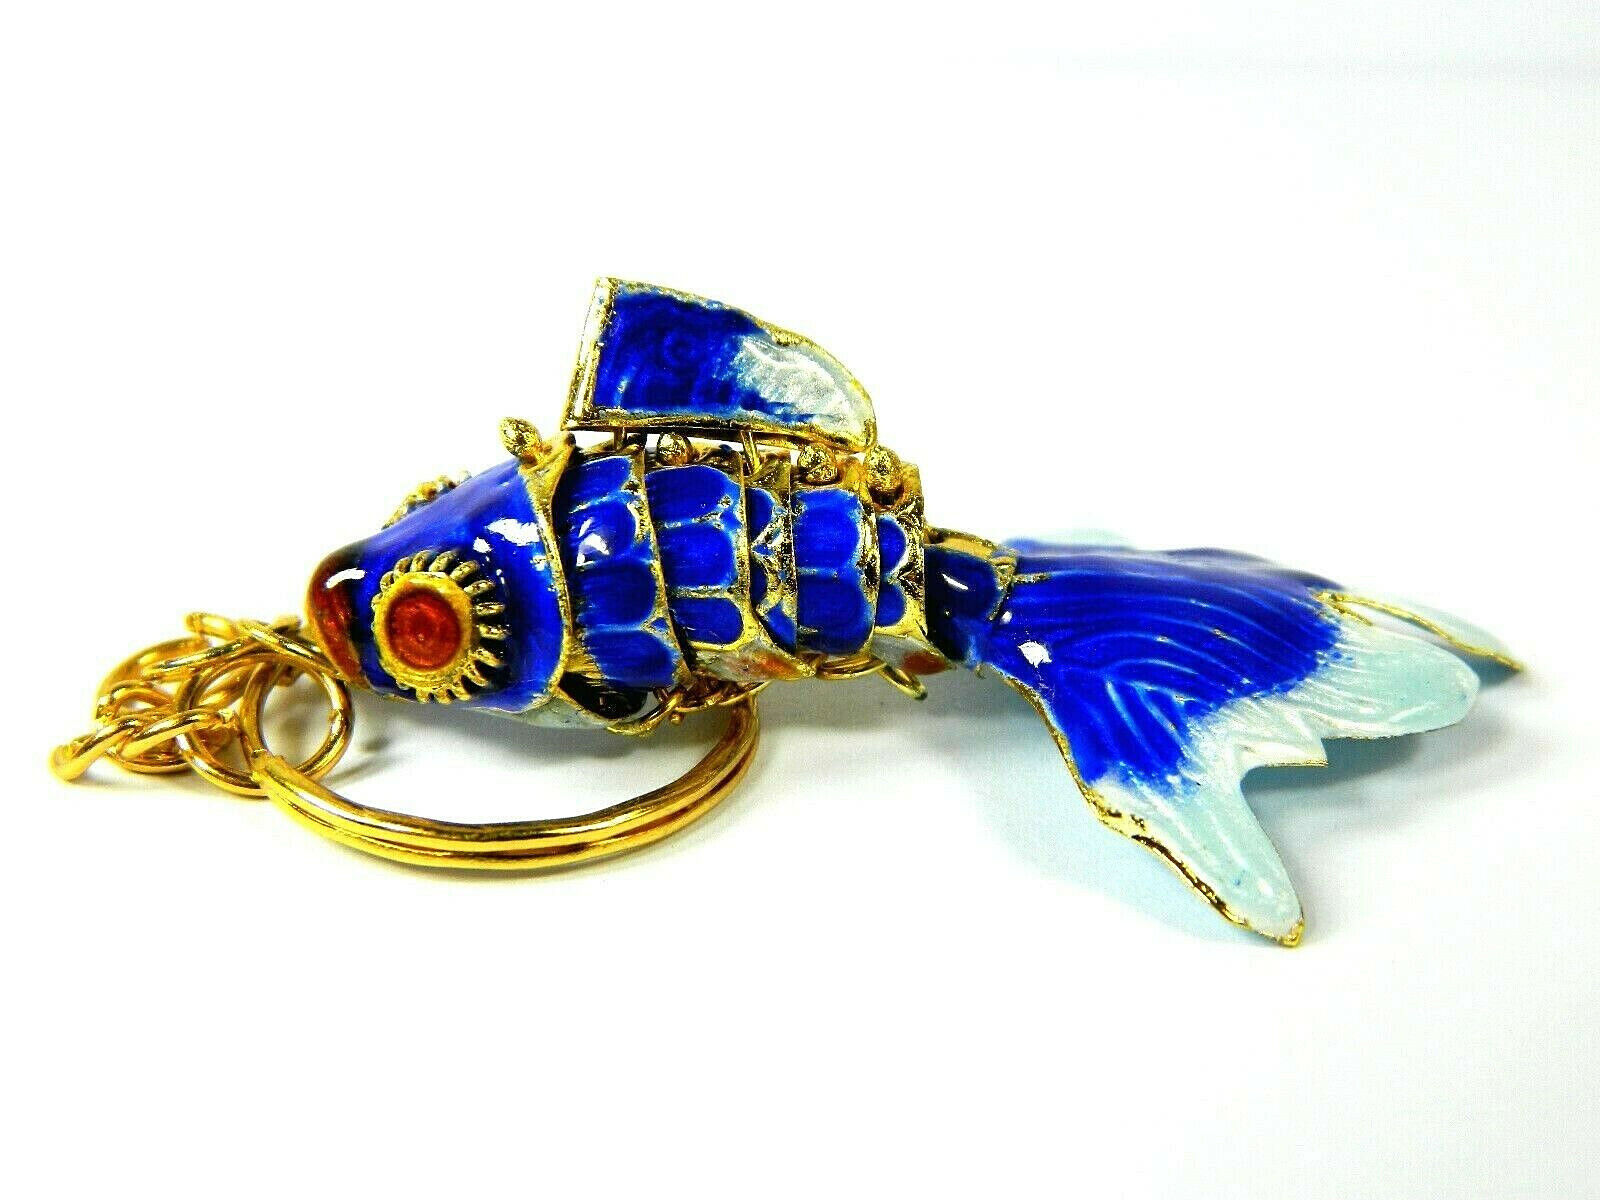 55mm Cloisonne Articulated Goldfish Koi Fish,Pendant Earrings Charm Ornaments